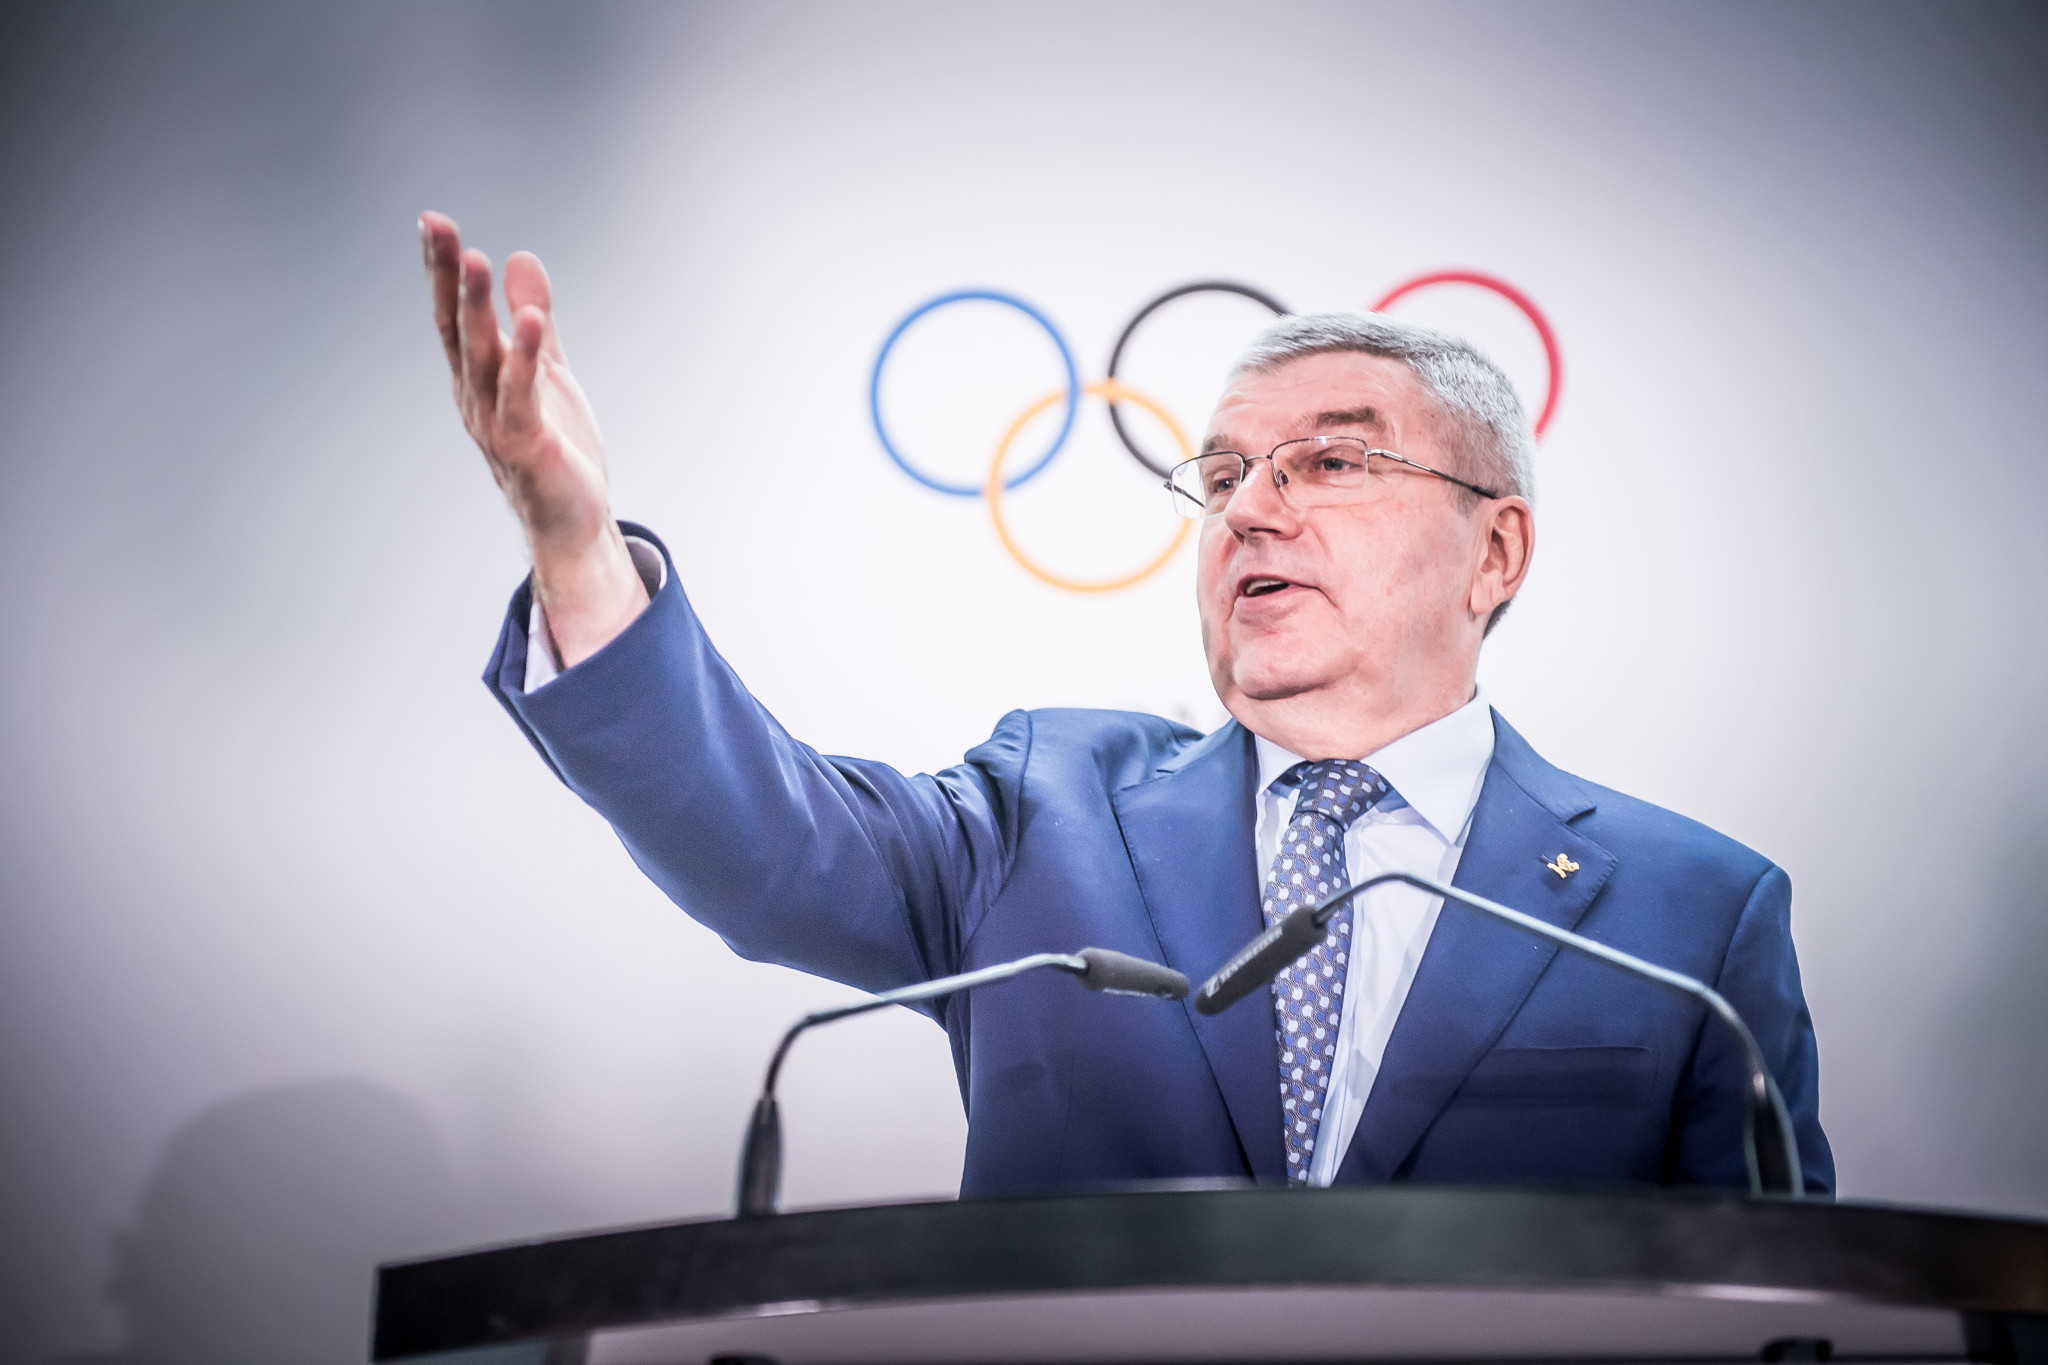 IOC President Bach congratulates taekwondo for 25 years as an Olympic sport